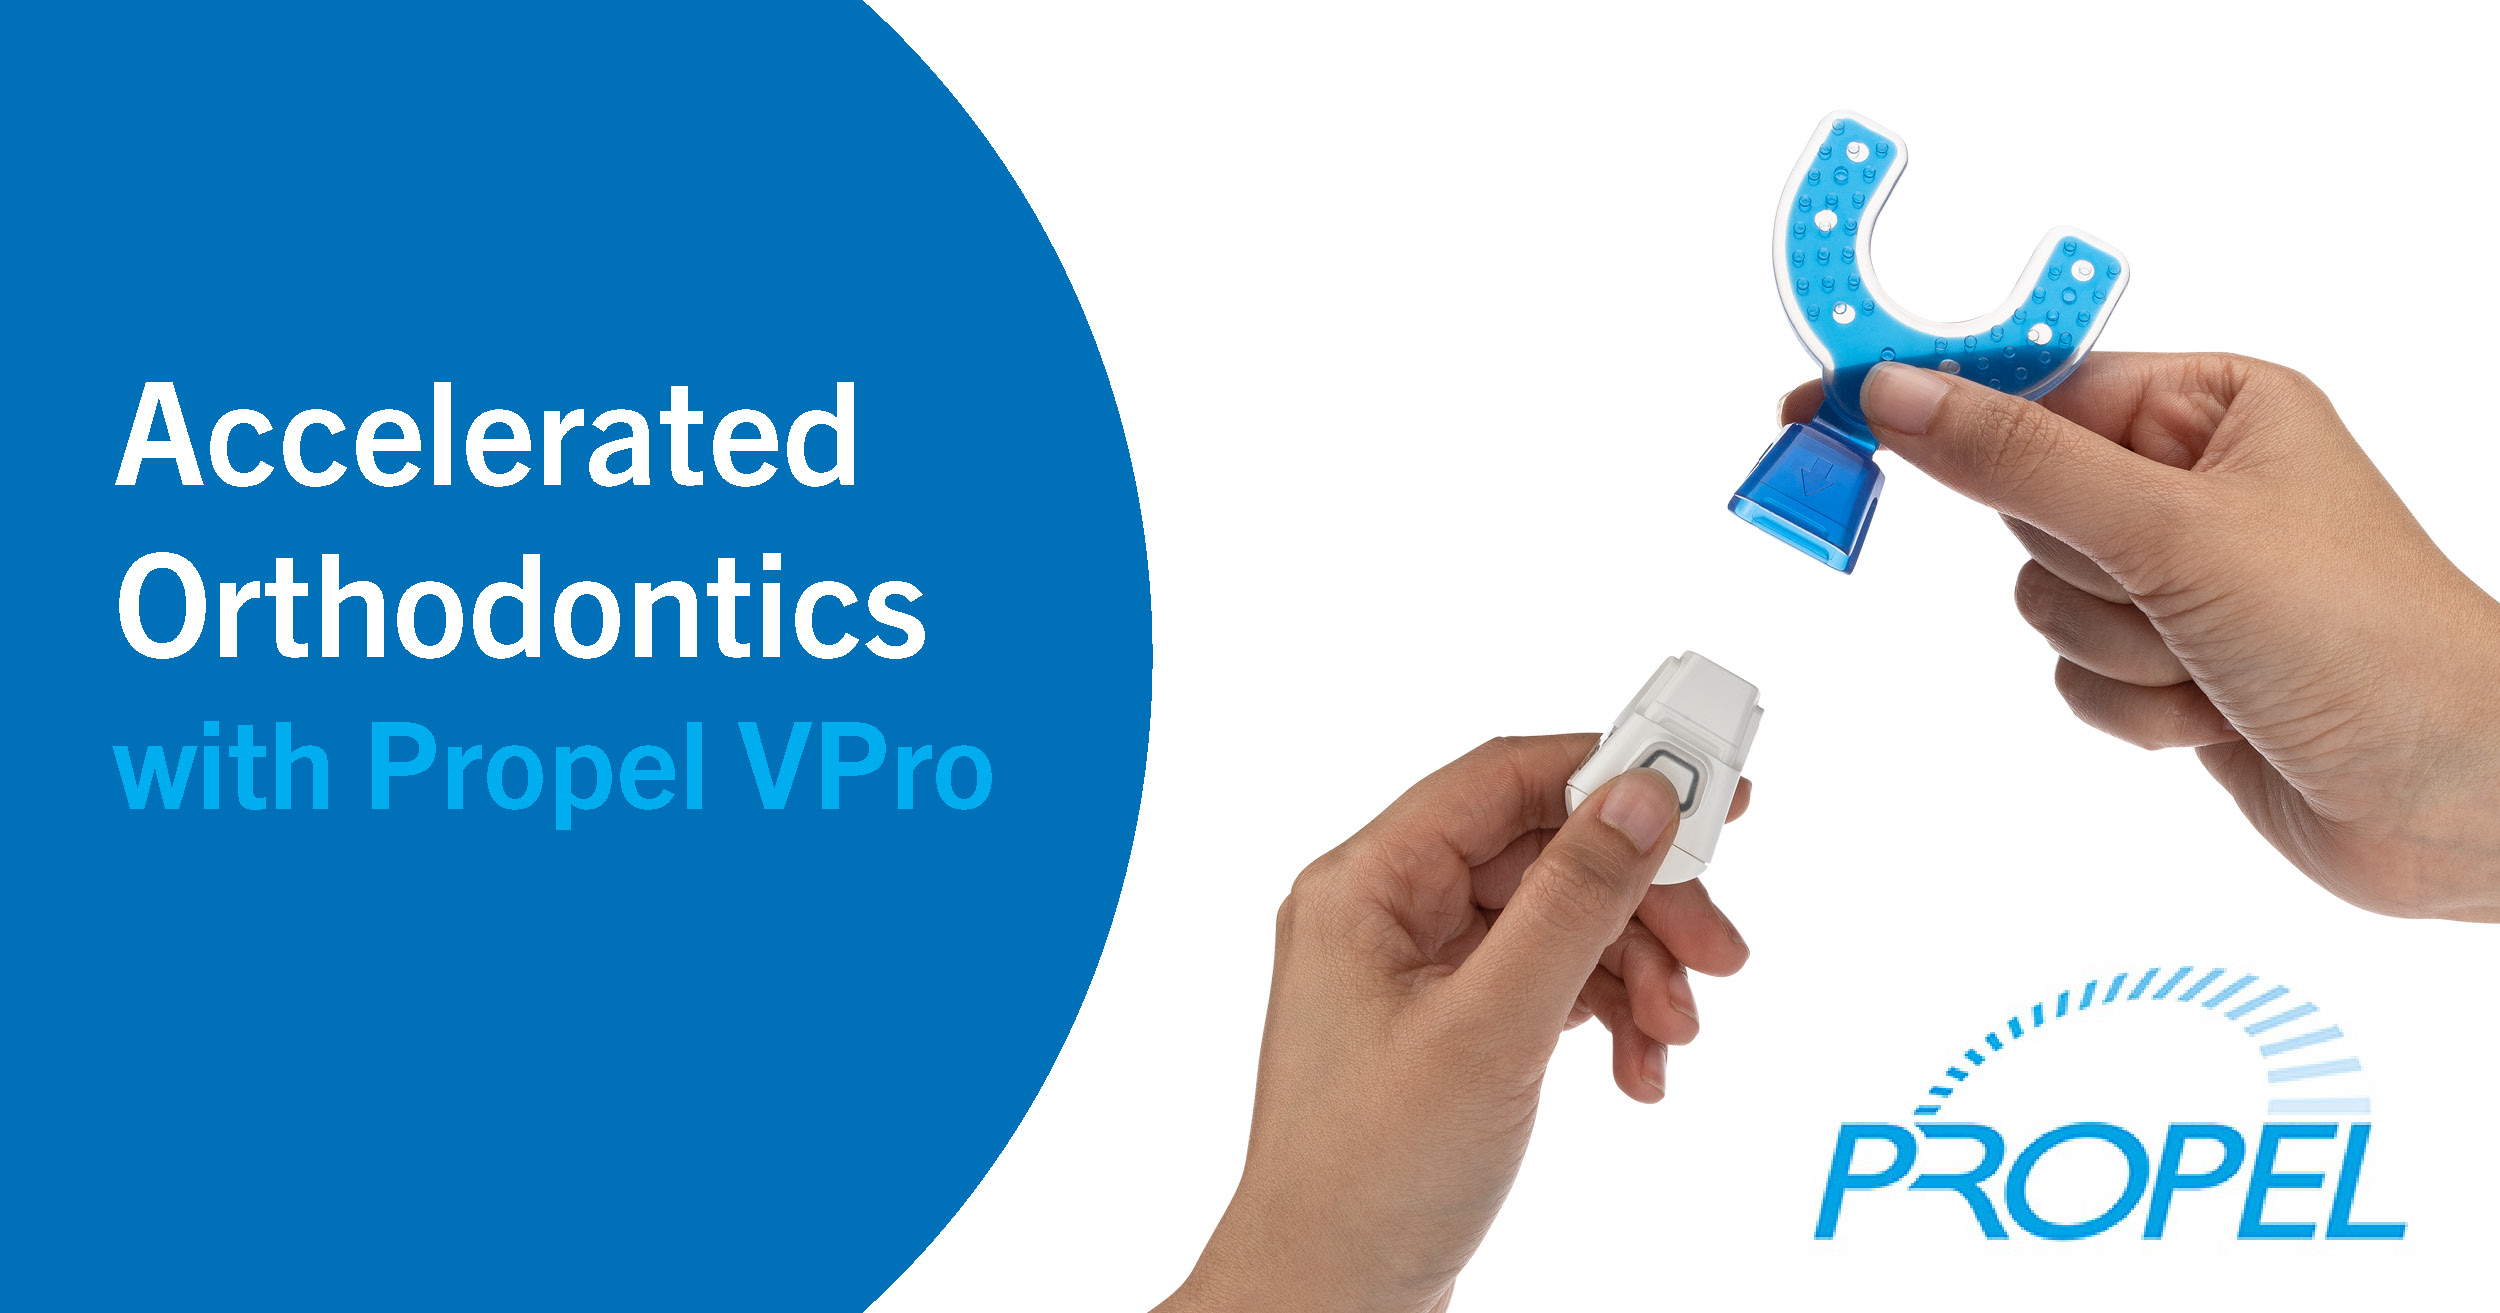 Propel VPro accelerated orthodontics